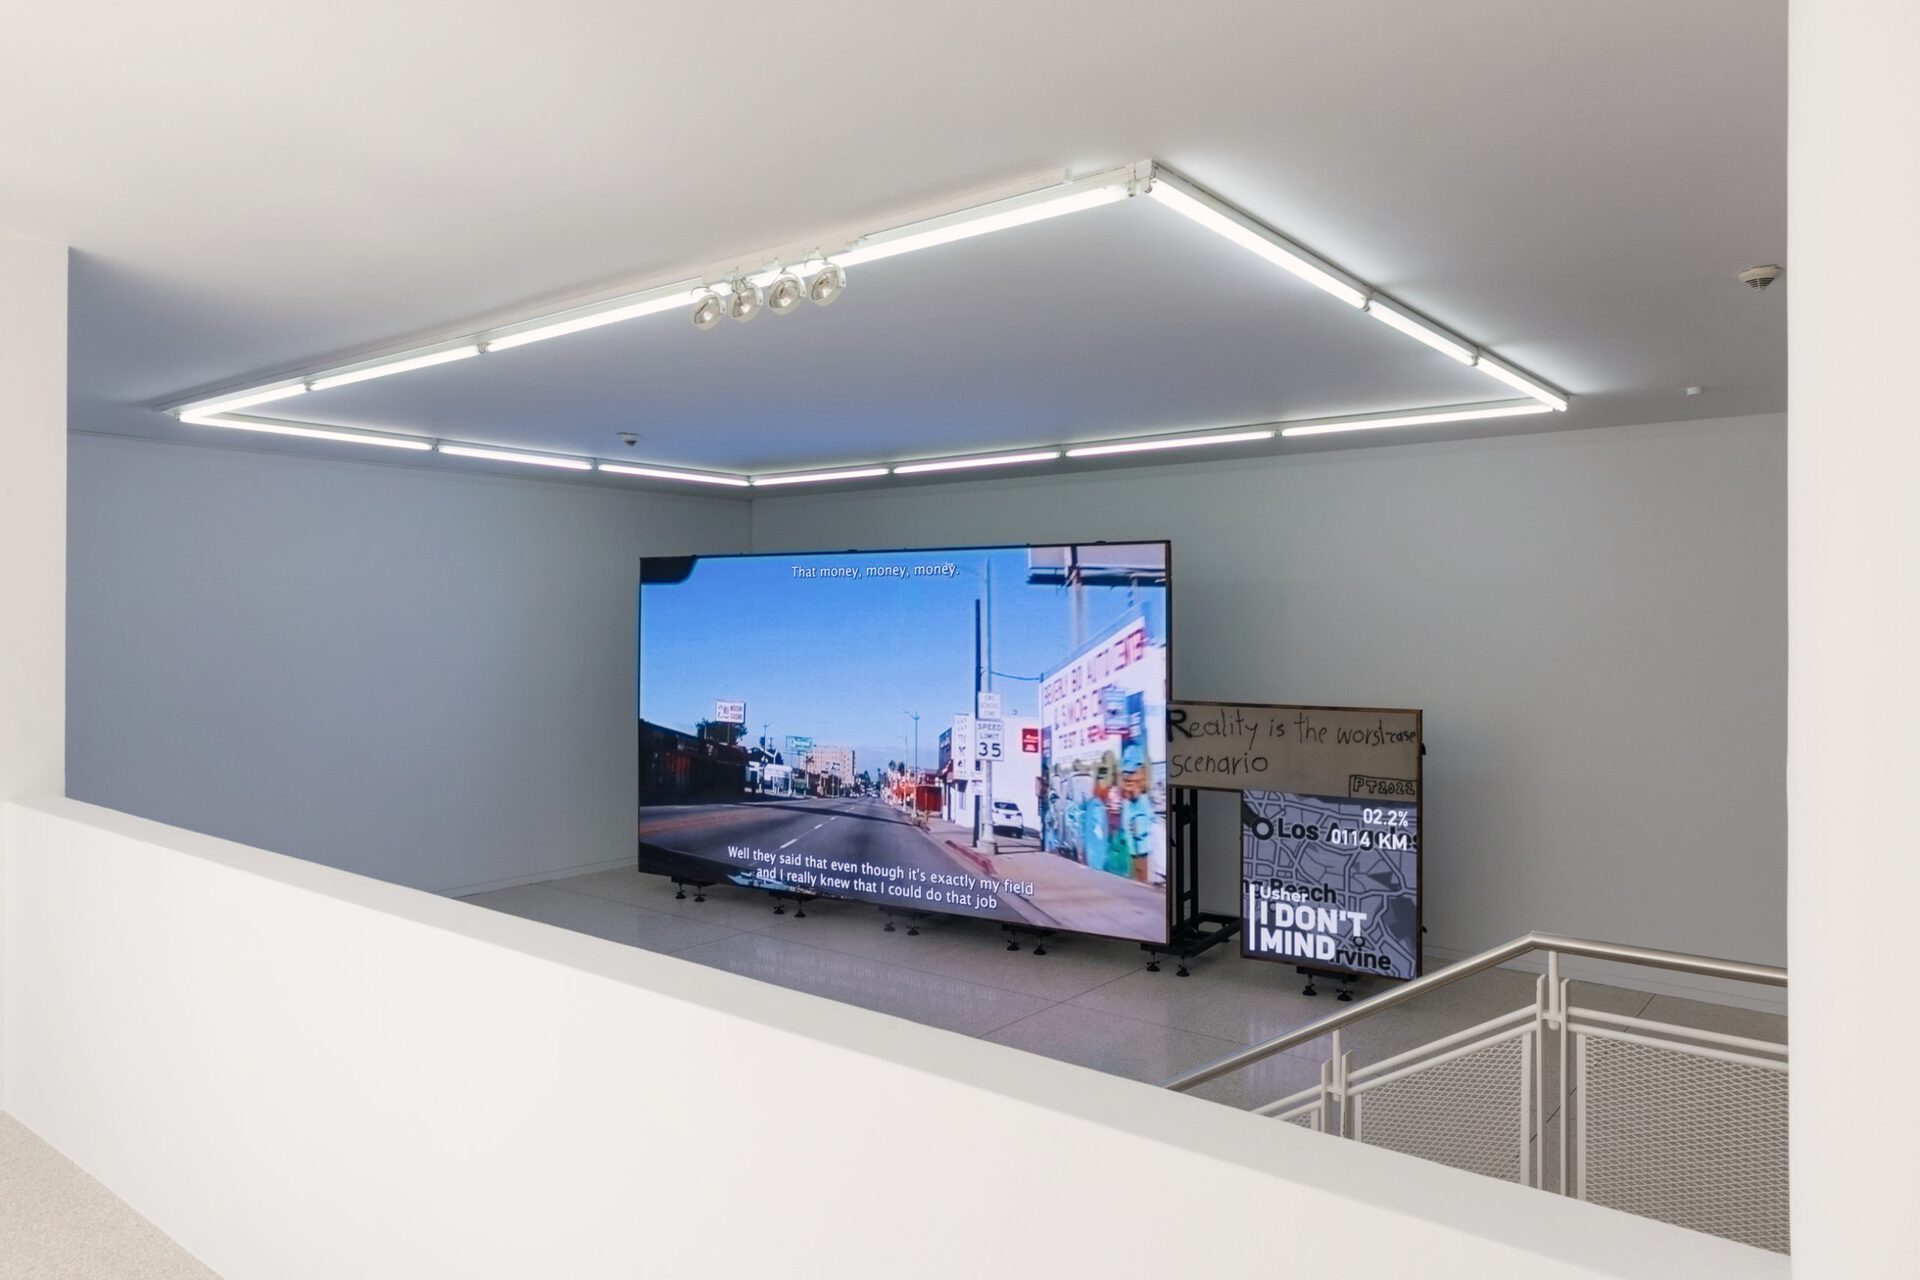 Philipp Timischl, “Reality is the worst-case scenario”, Exhibition at Heidelberger Kunstverein, June 12–August 28, 2022, Installation shots by Lys Y. Seng